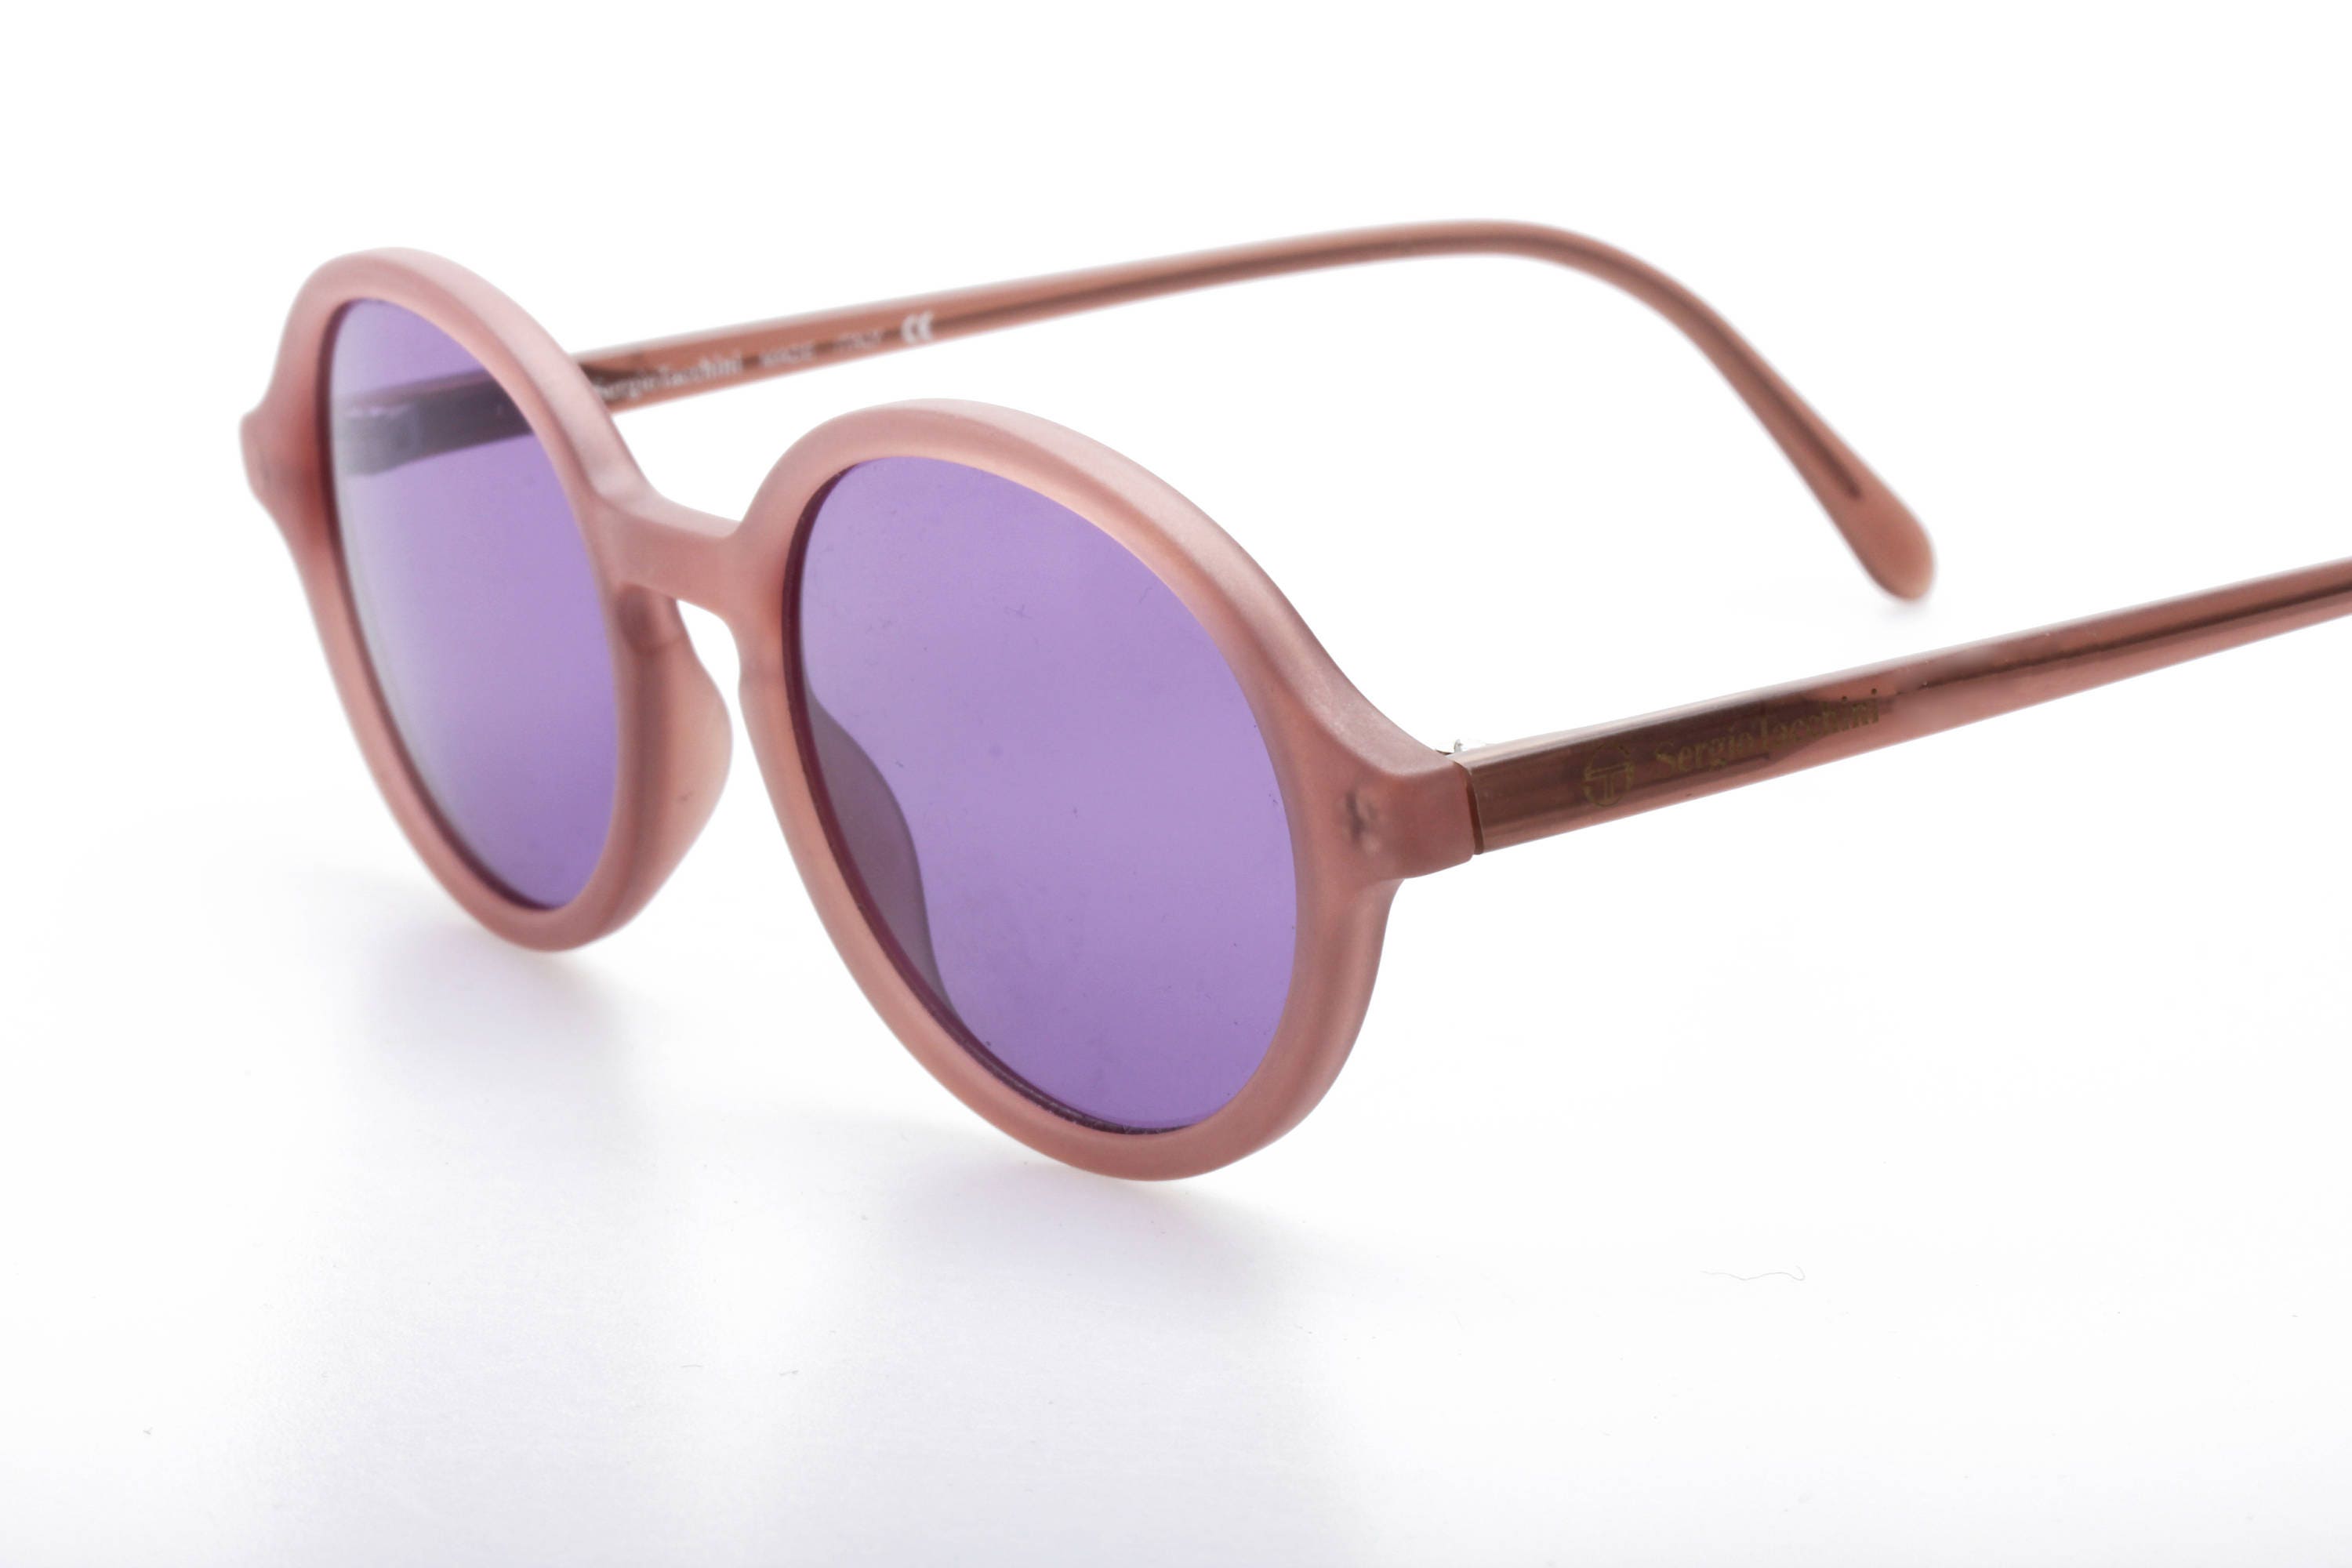 Sergio Tacchini 1609 oval sunglasses designed/made in Italy | Etsy